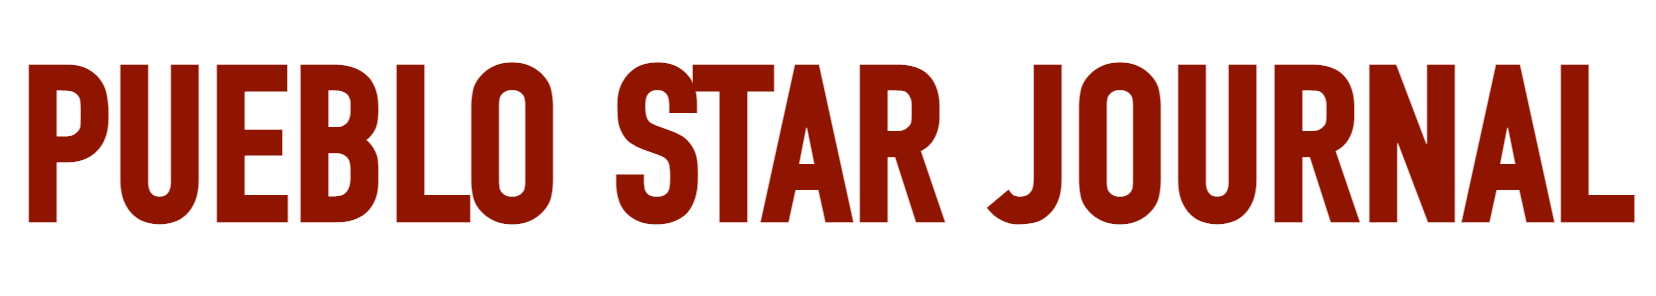 Pueblo_Star_Journal_horizontal_logo